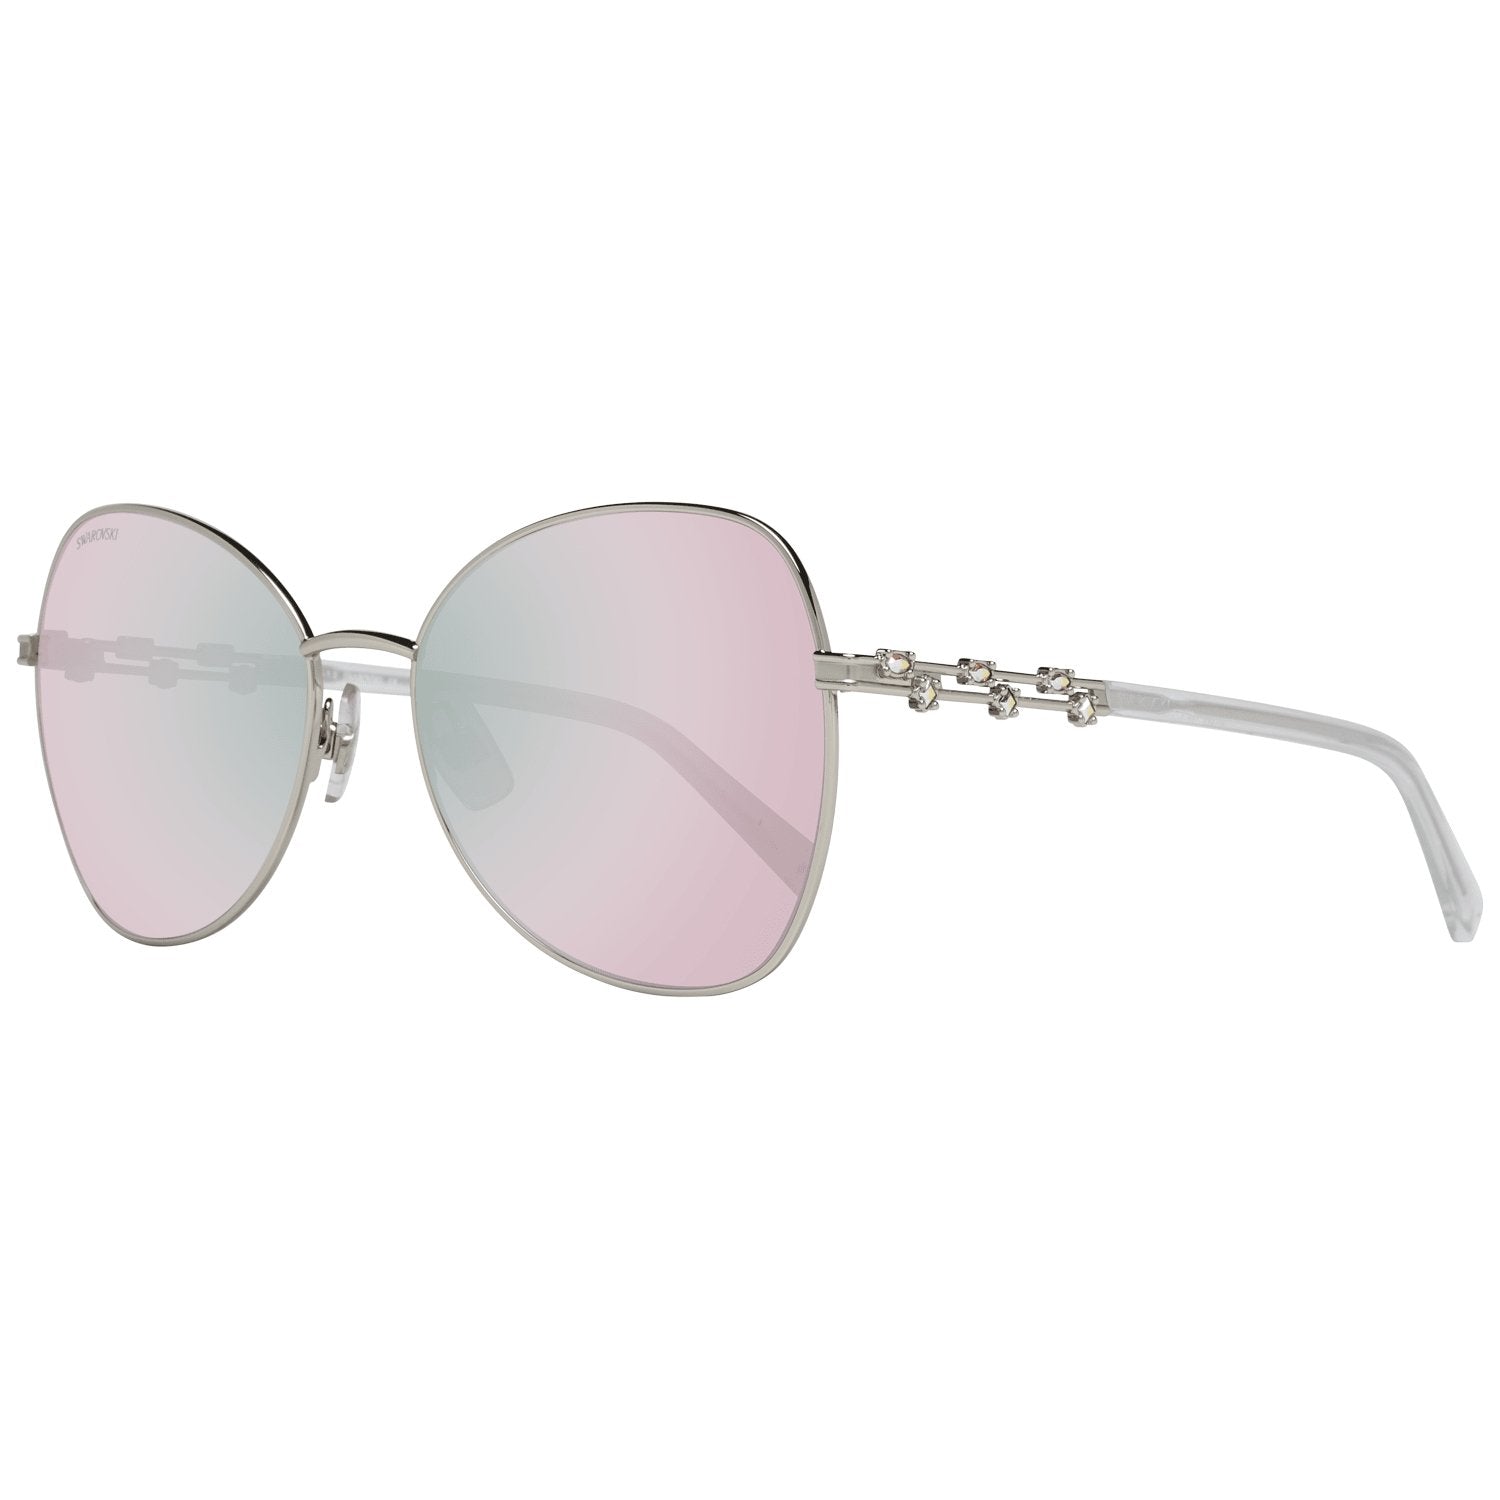 Swarovski Silver Women Sunglasses - Fizigo